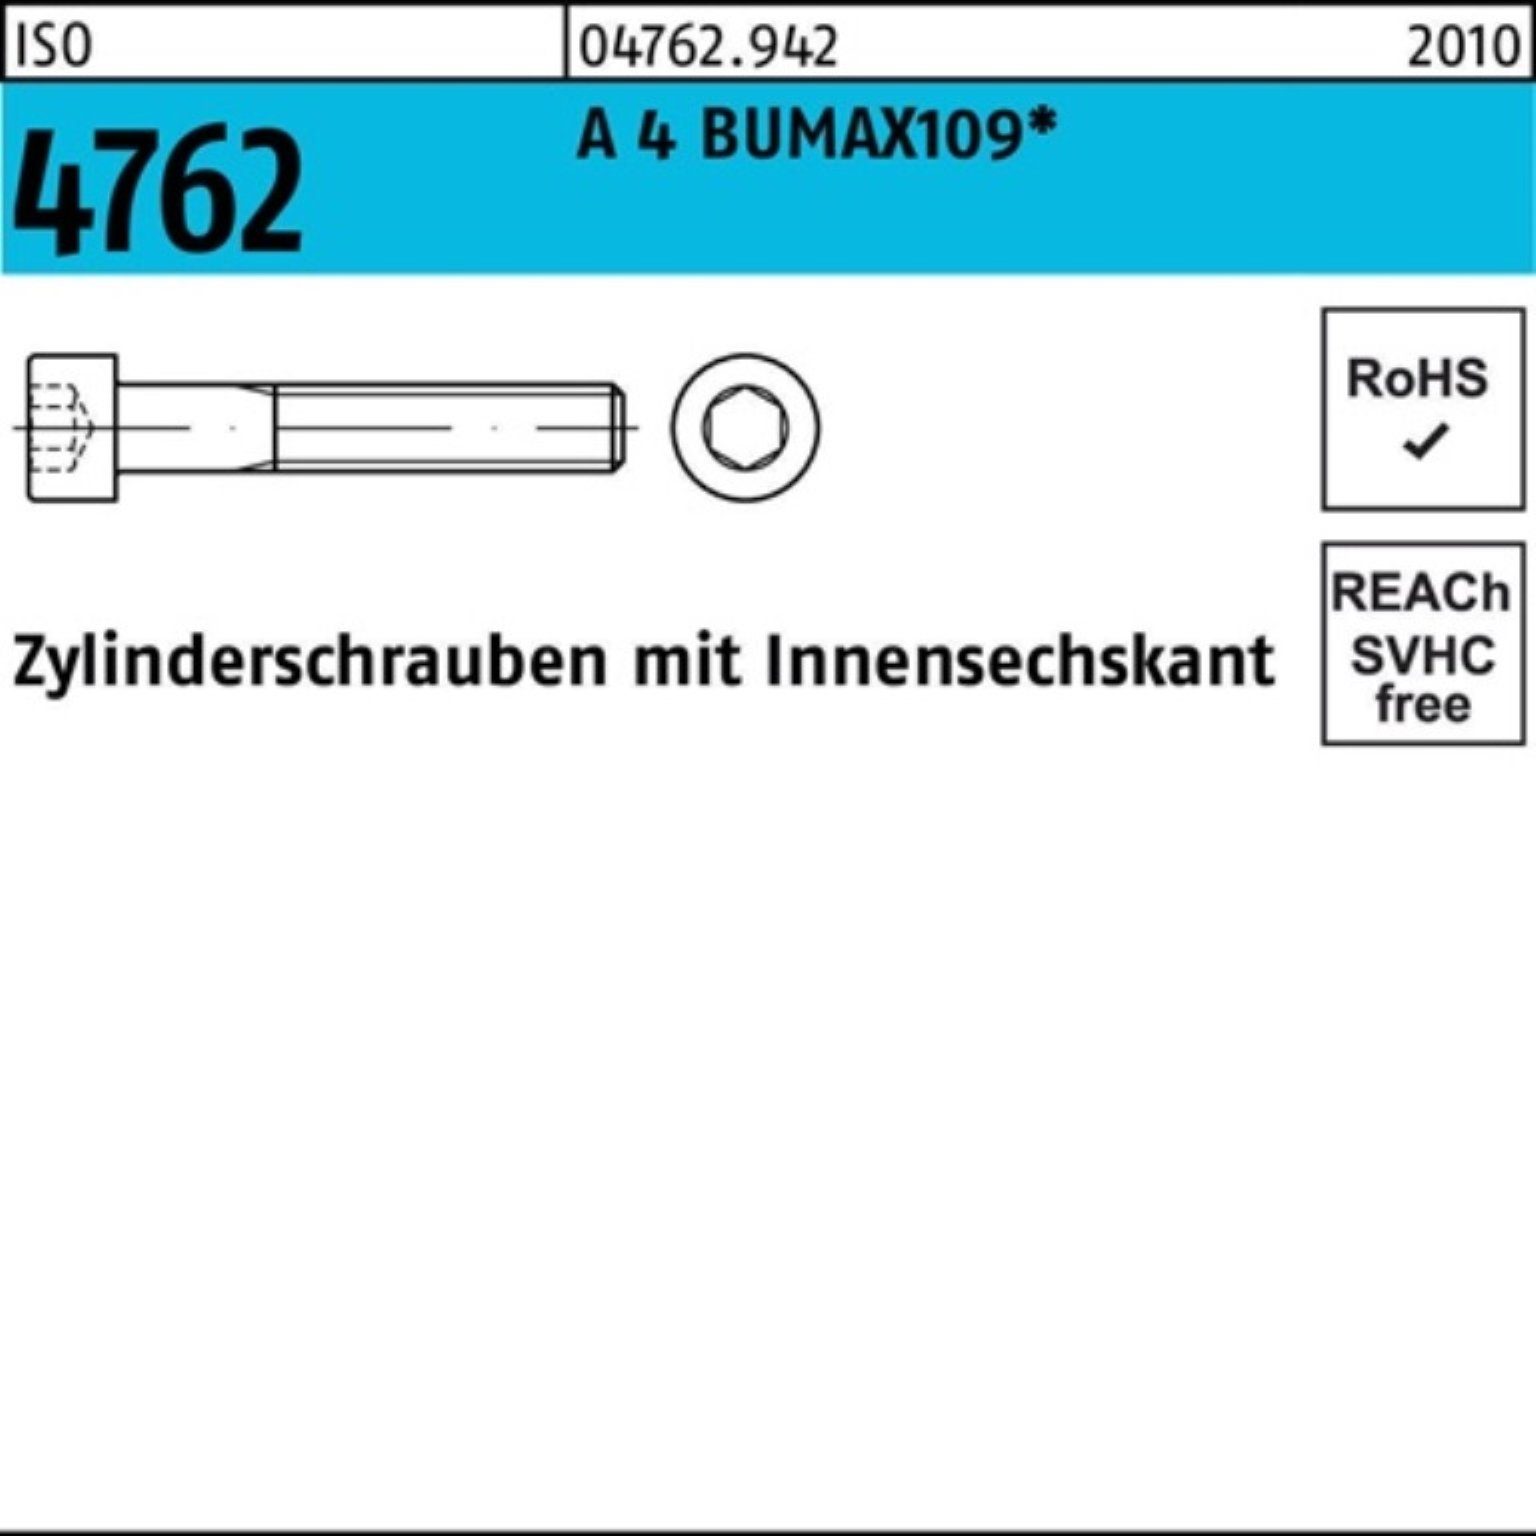 Bufab Zylinderschraube 100er Pack Zylinderschraube ISO 4762 Innen-6kt M6x 40 A 4 BUMAX109 100